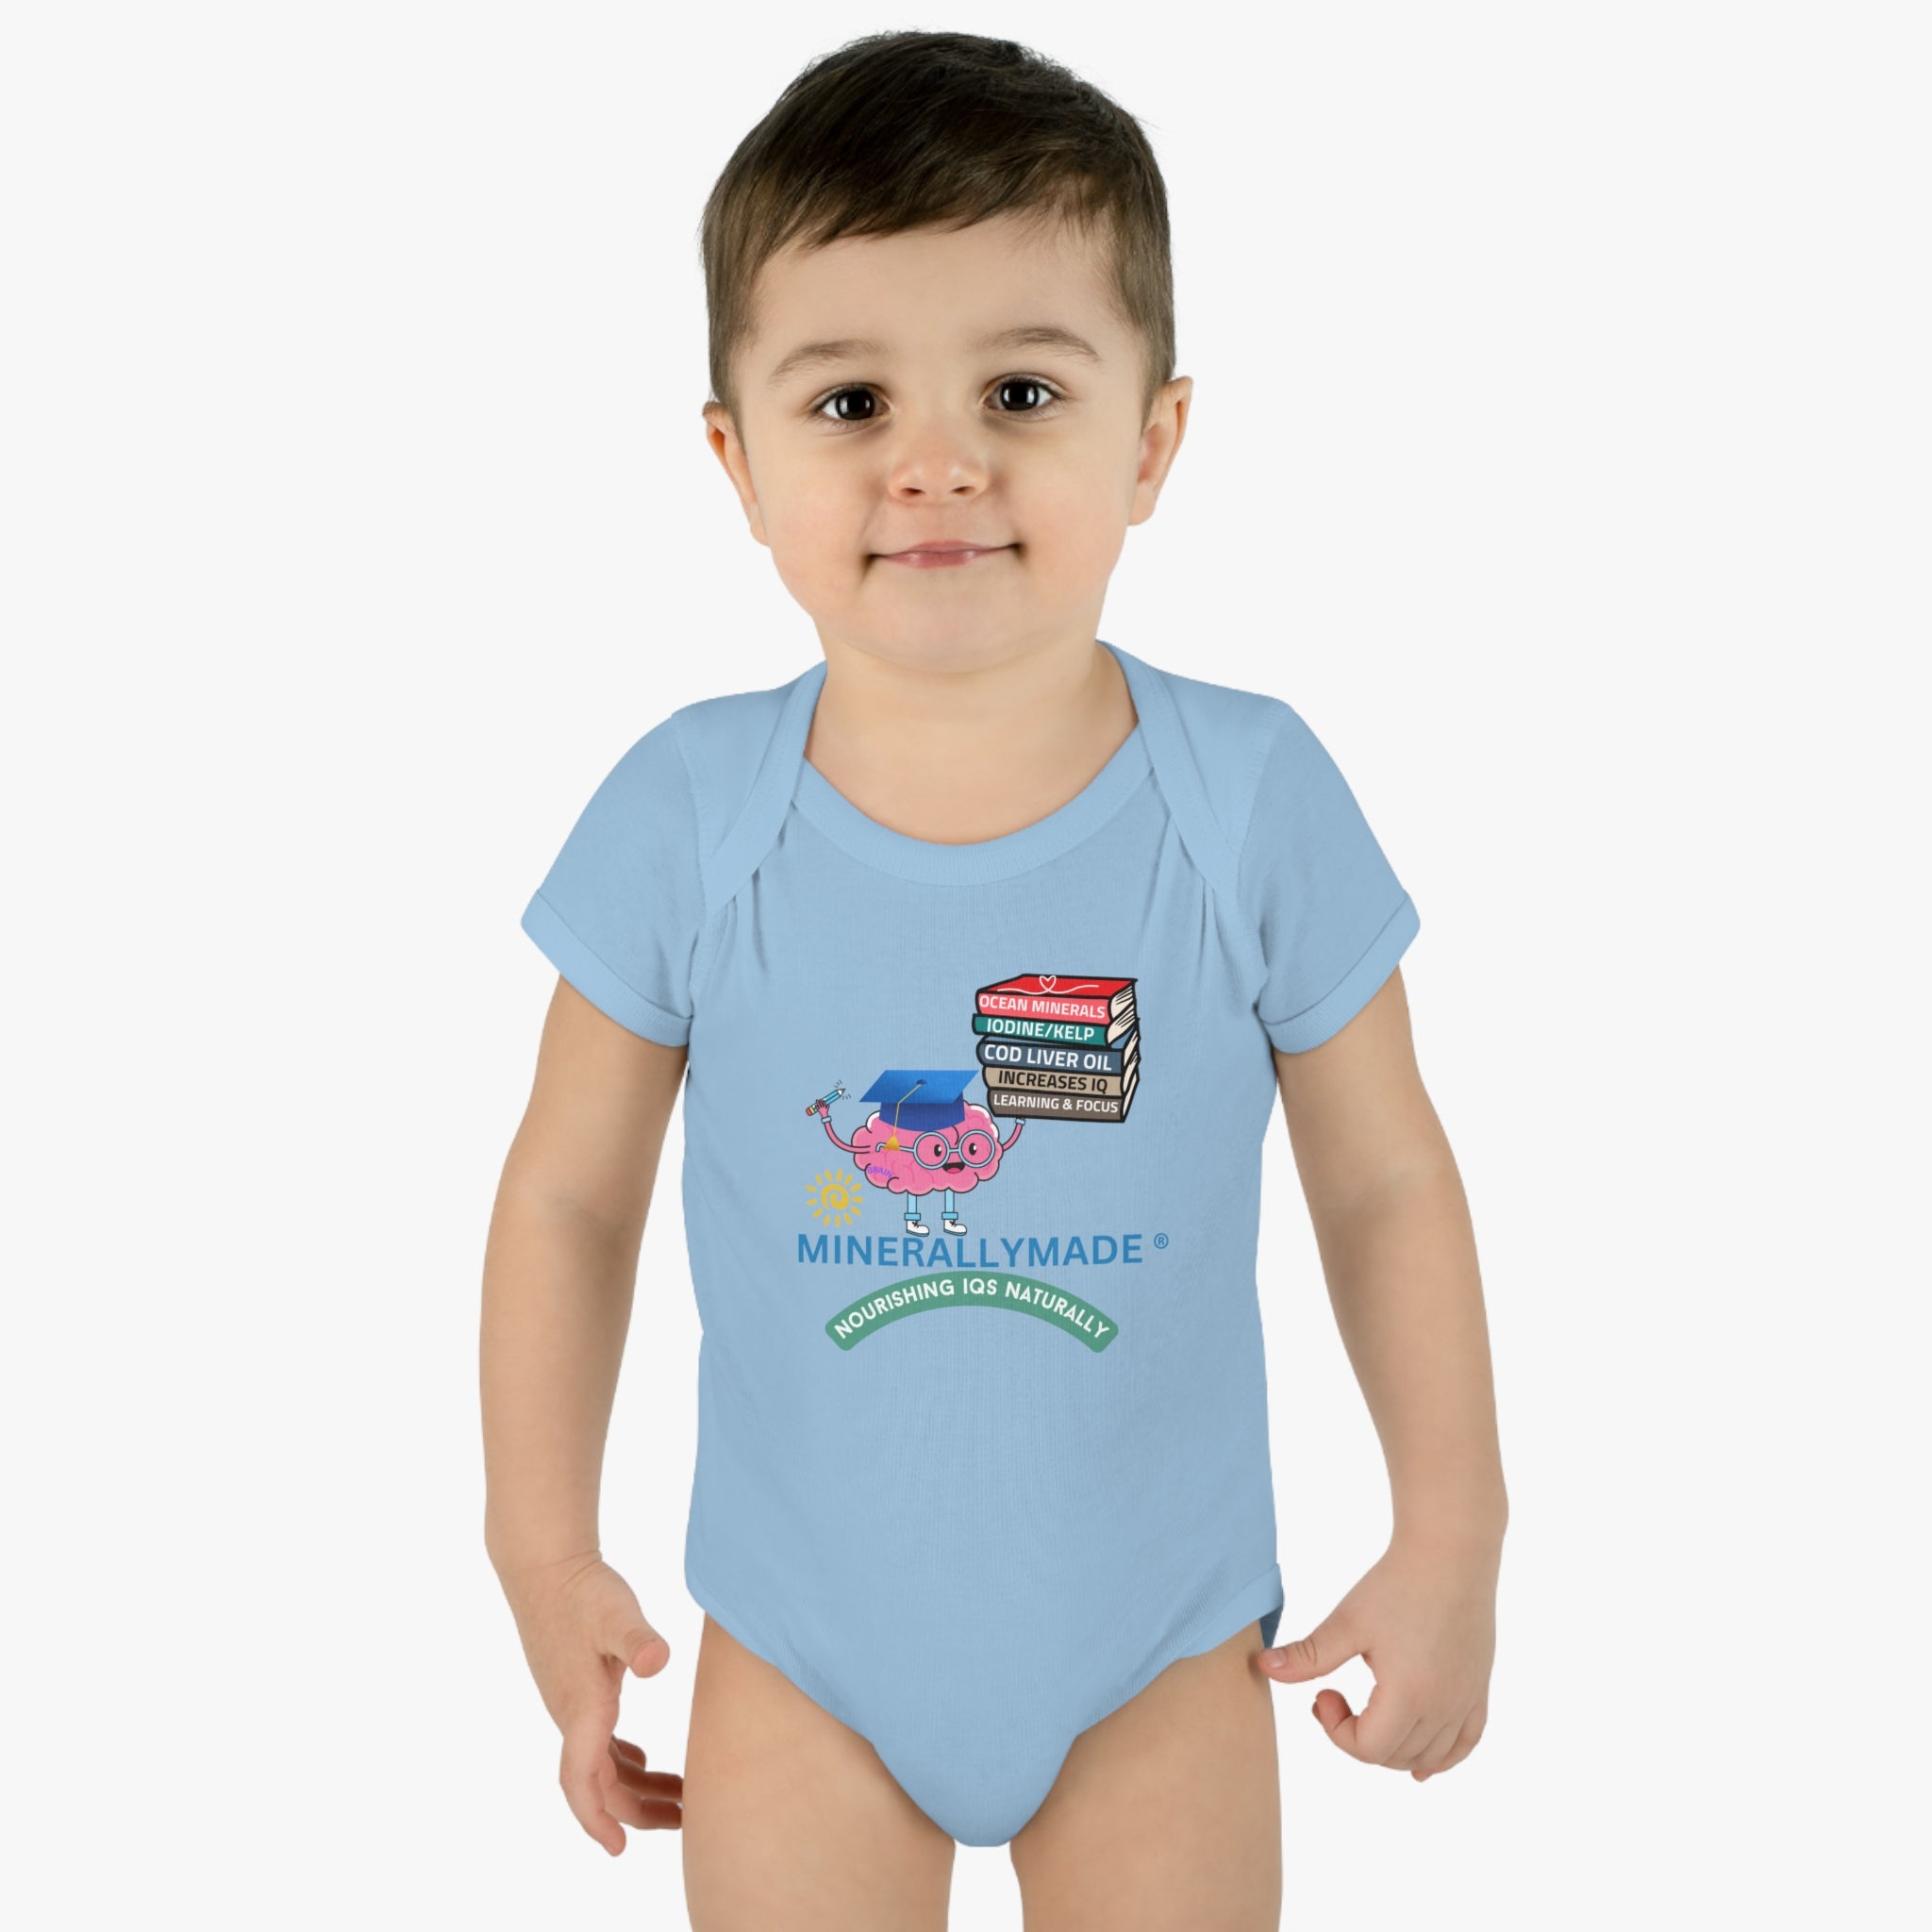 Minerallymade | Nourishing IQs Naturally | Infant Baby Rib Bodysuit